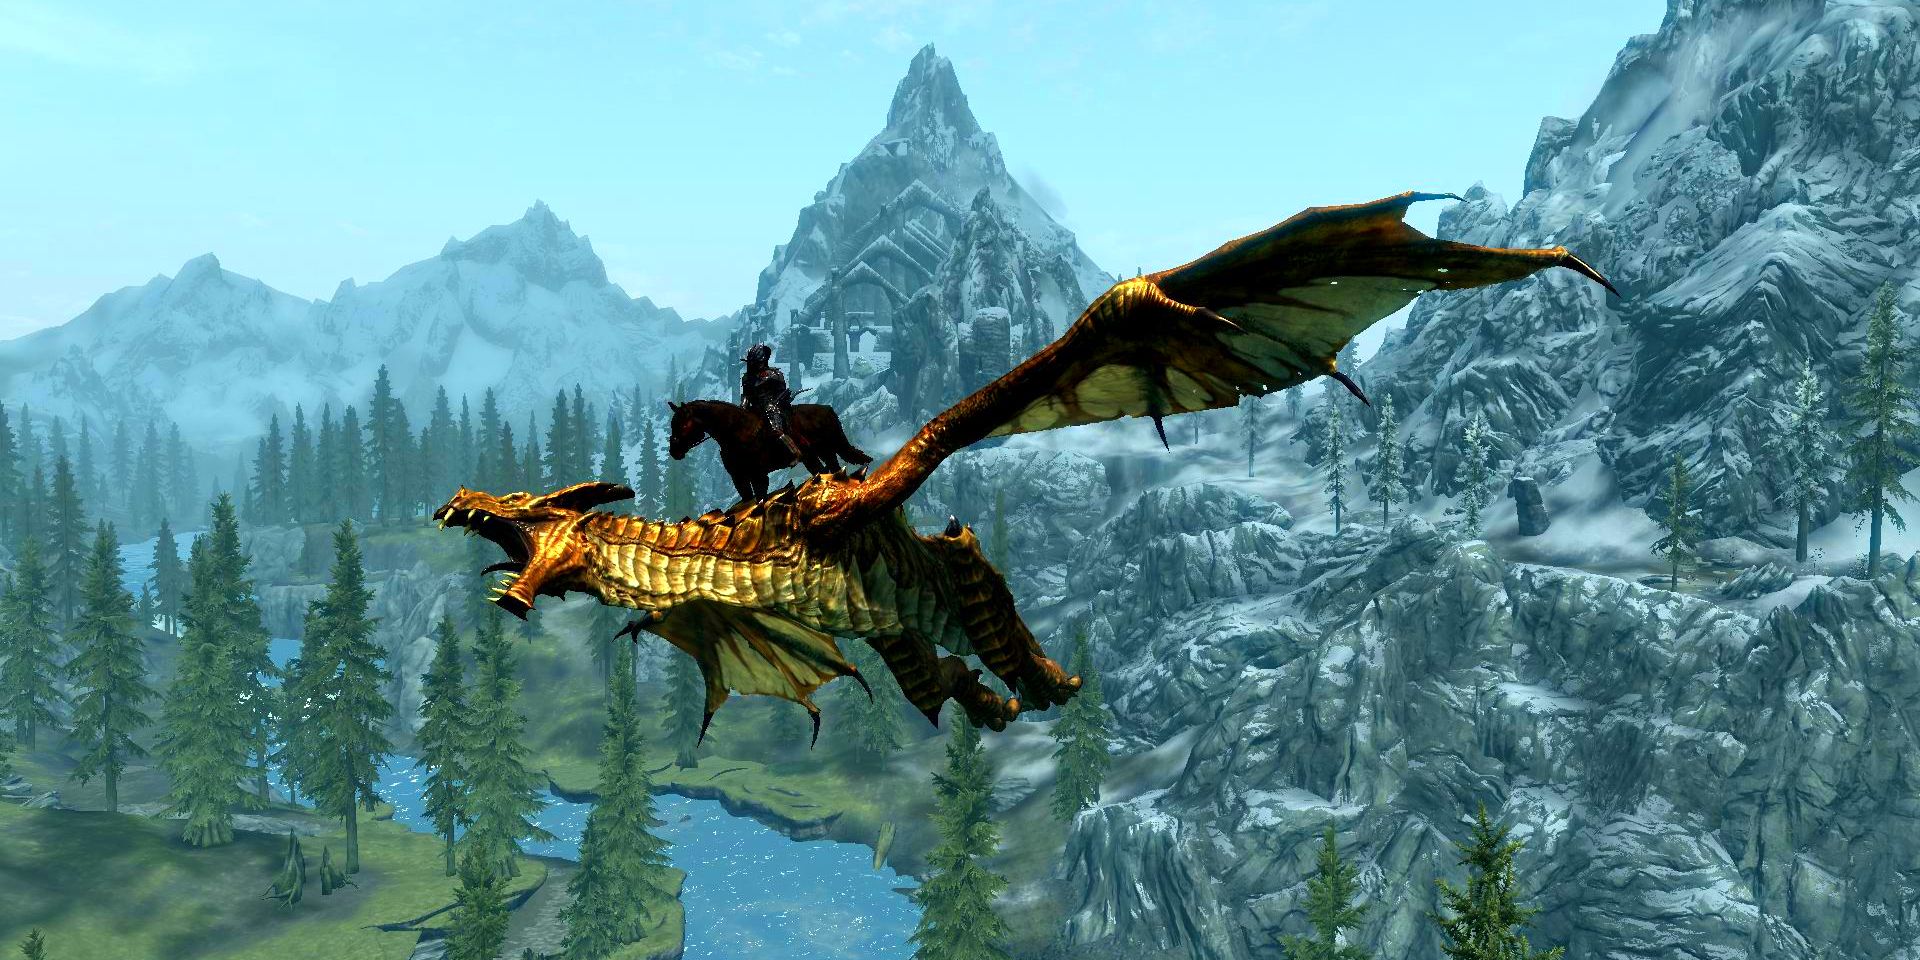 Horse on dragon in Skyrim